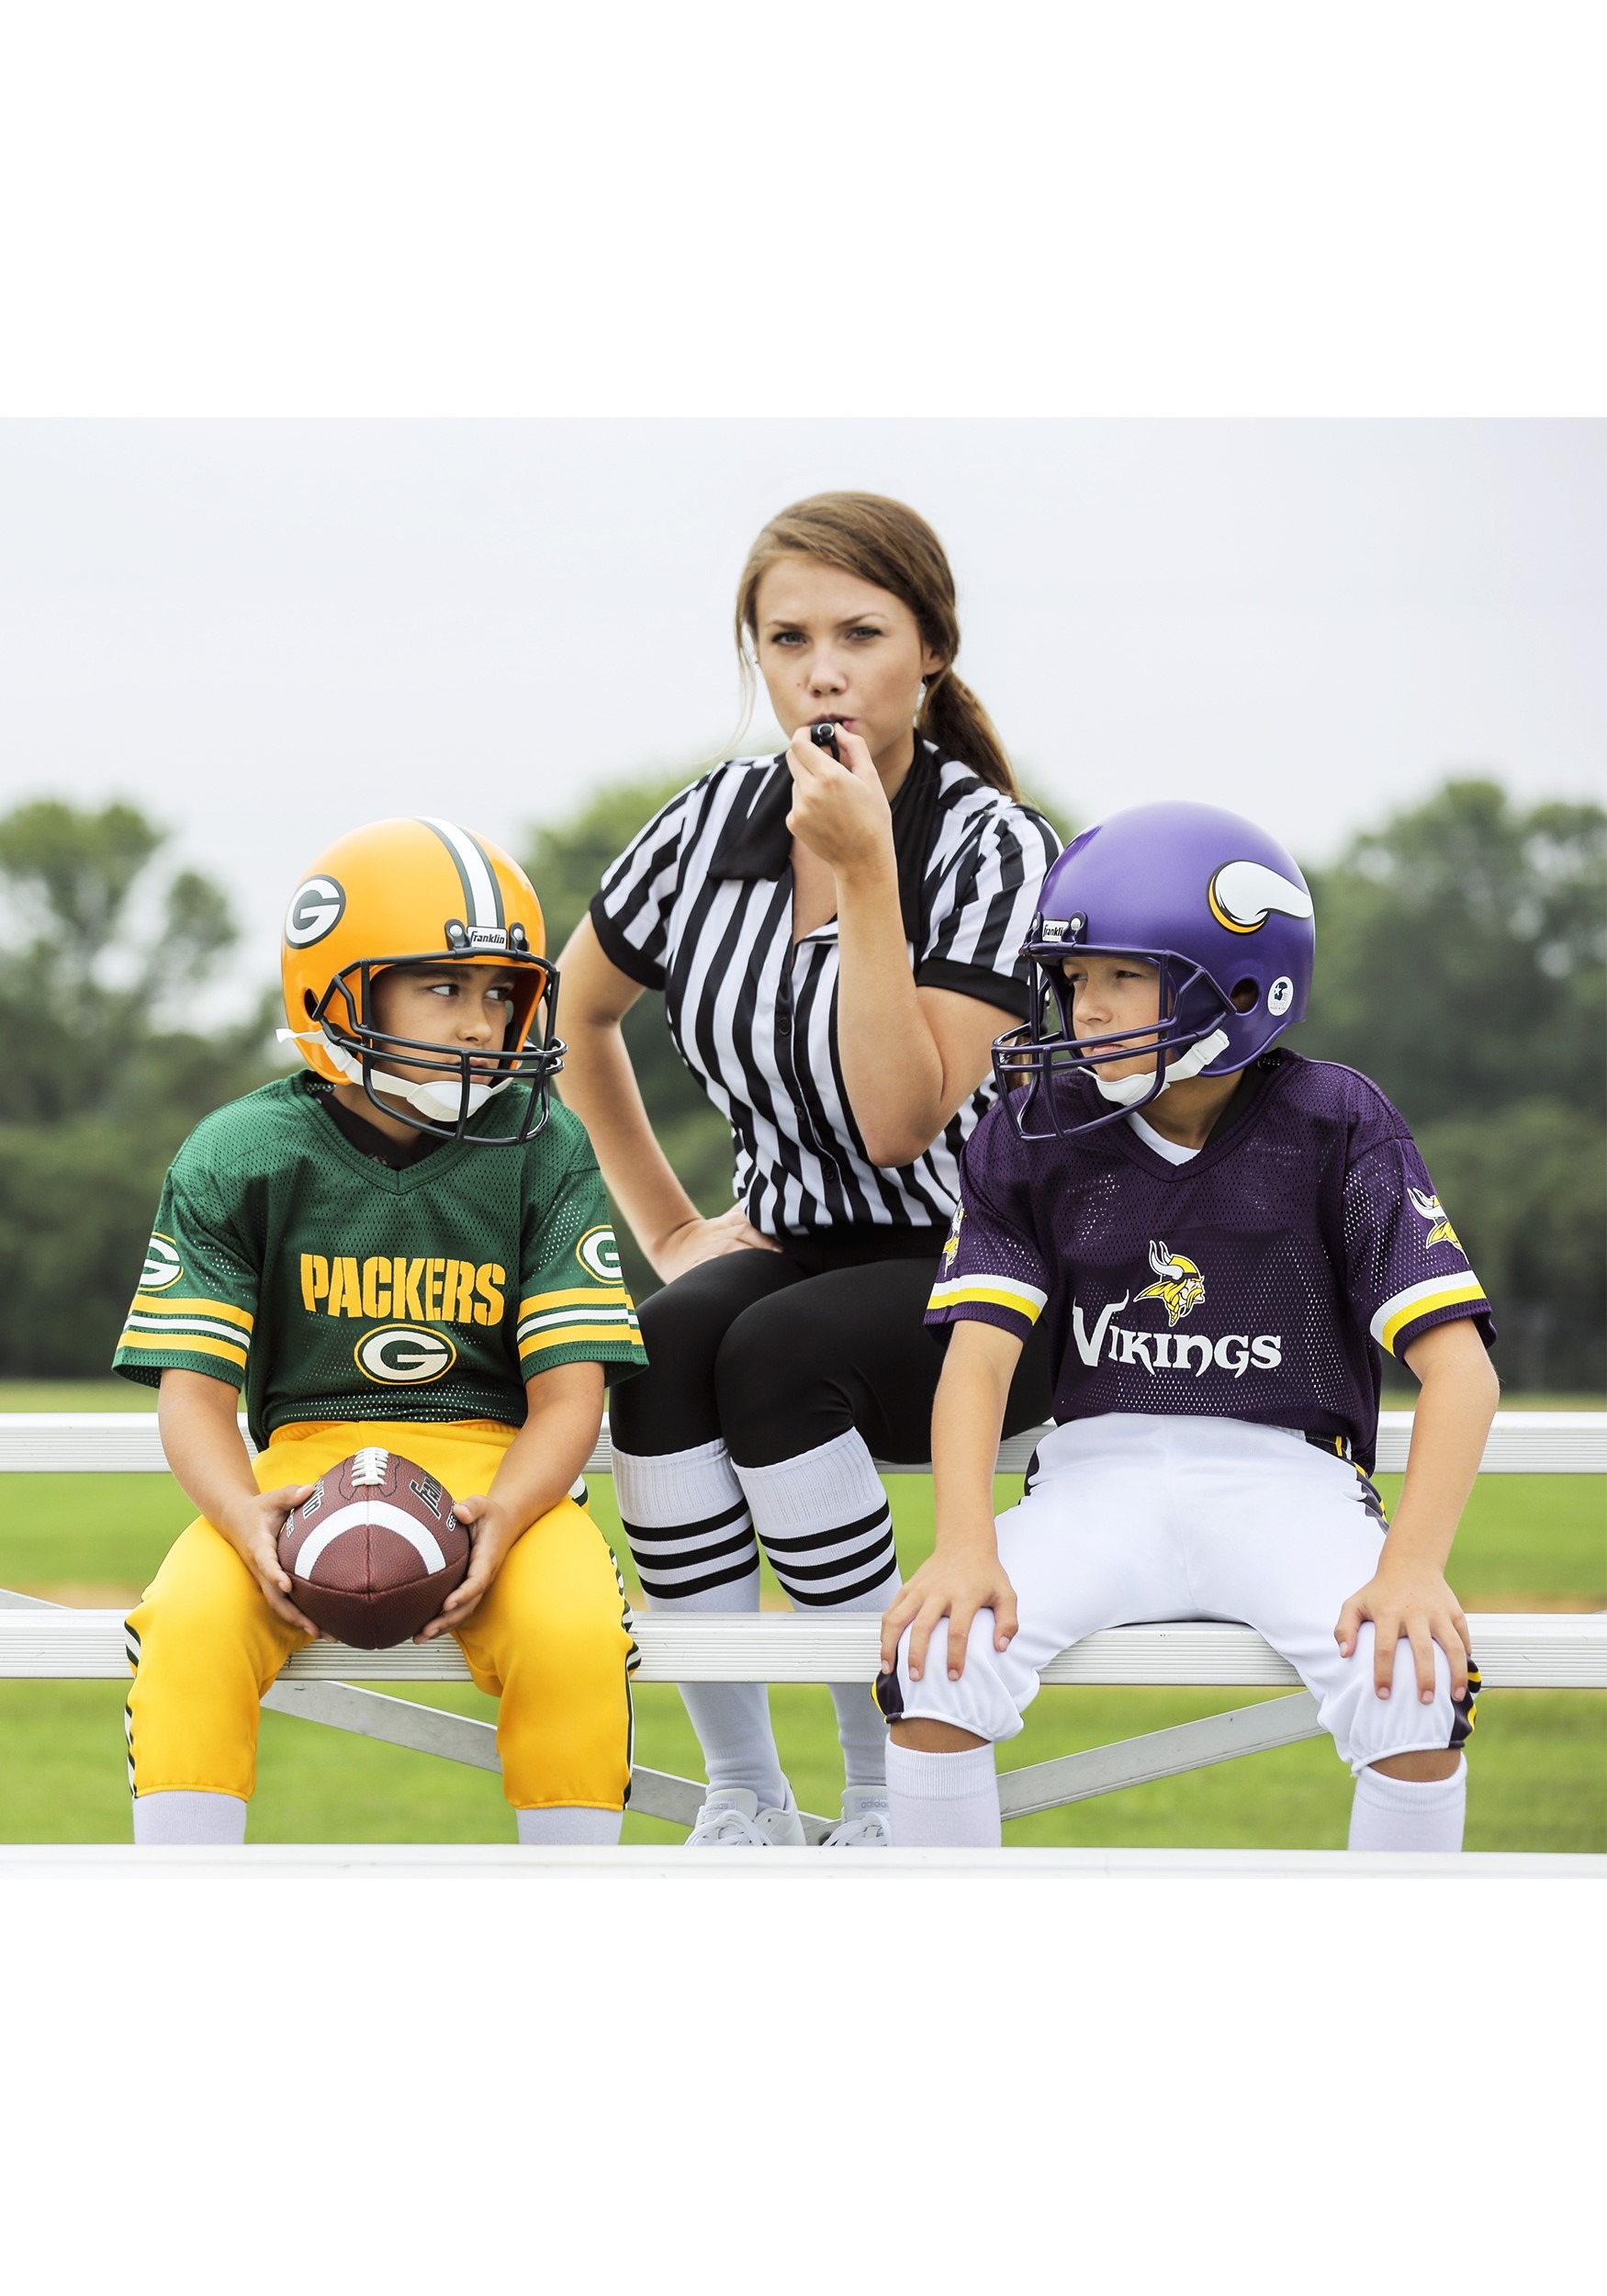 Packers NFL Kid's Uniform Costume